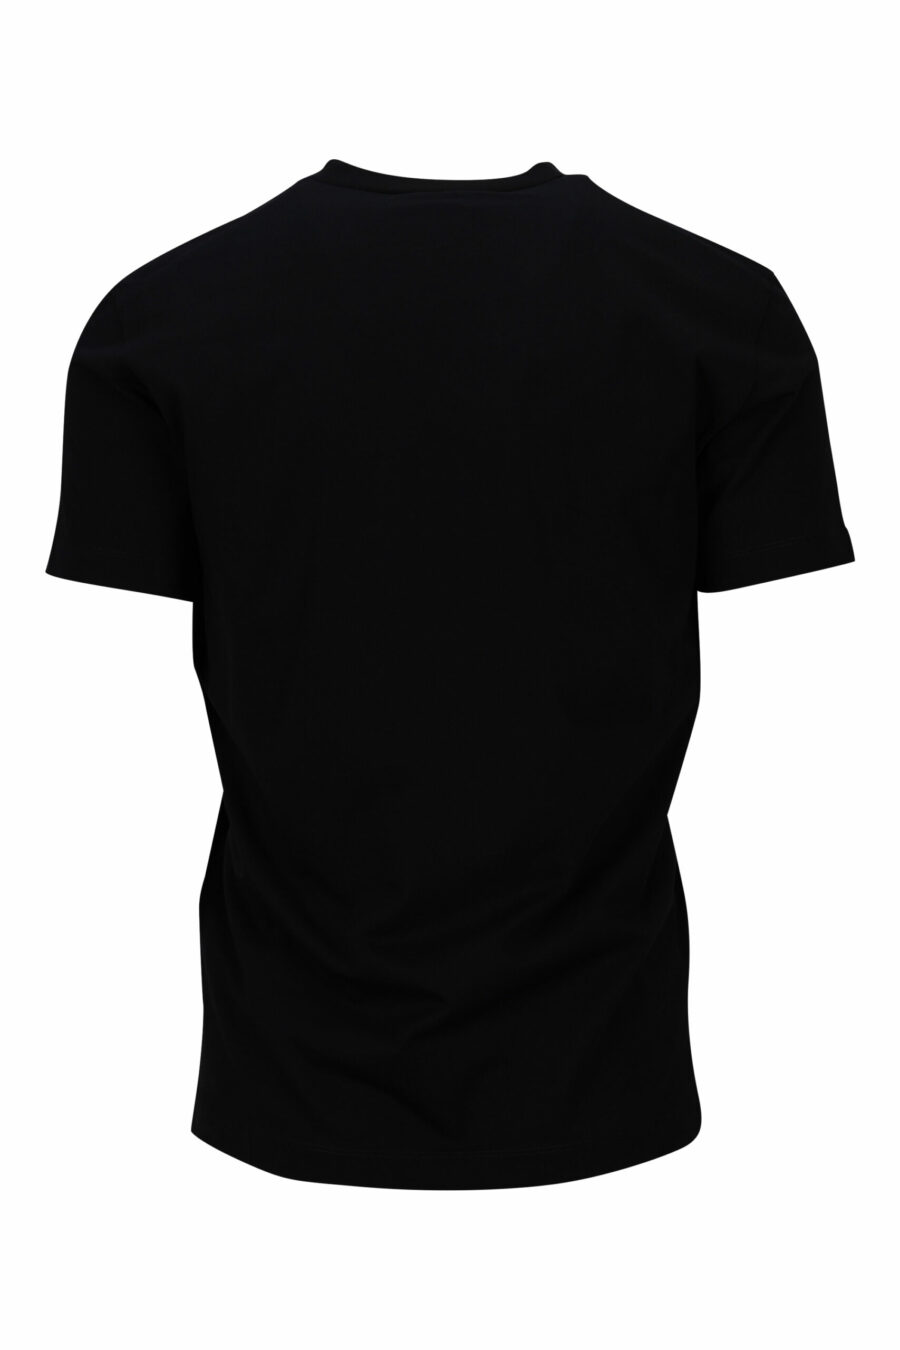 T-shirt noir avec maxilogo "ceresio 9 milano" - 8054148504984 1 scaled